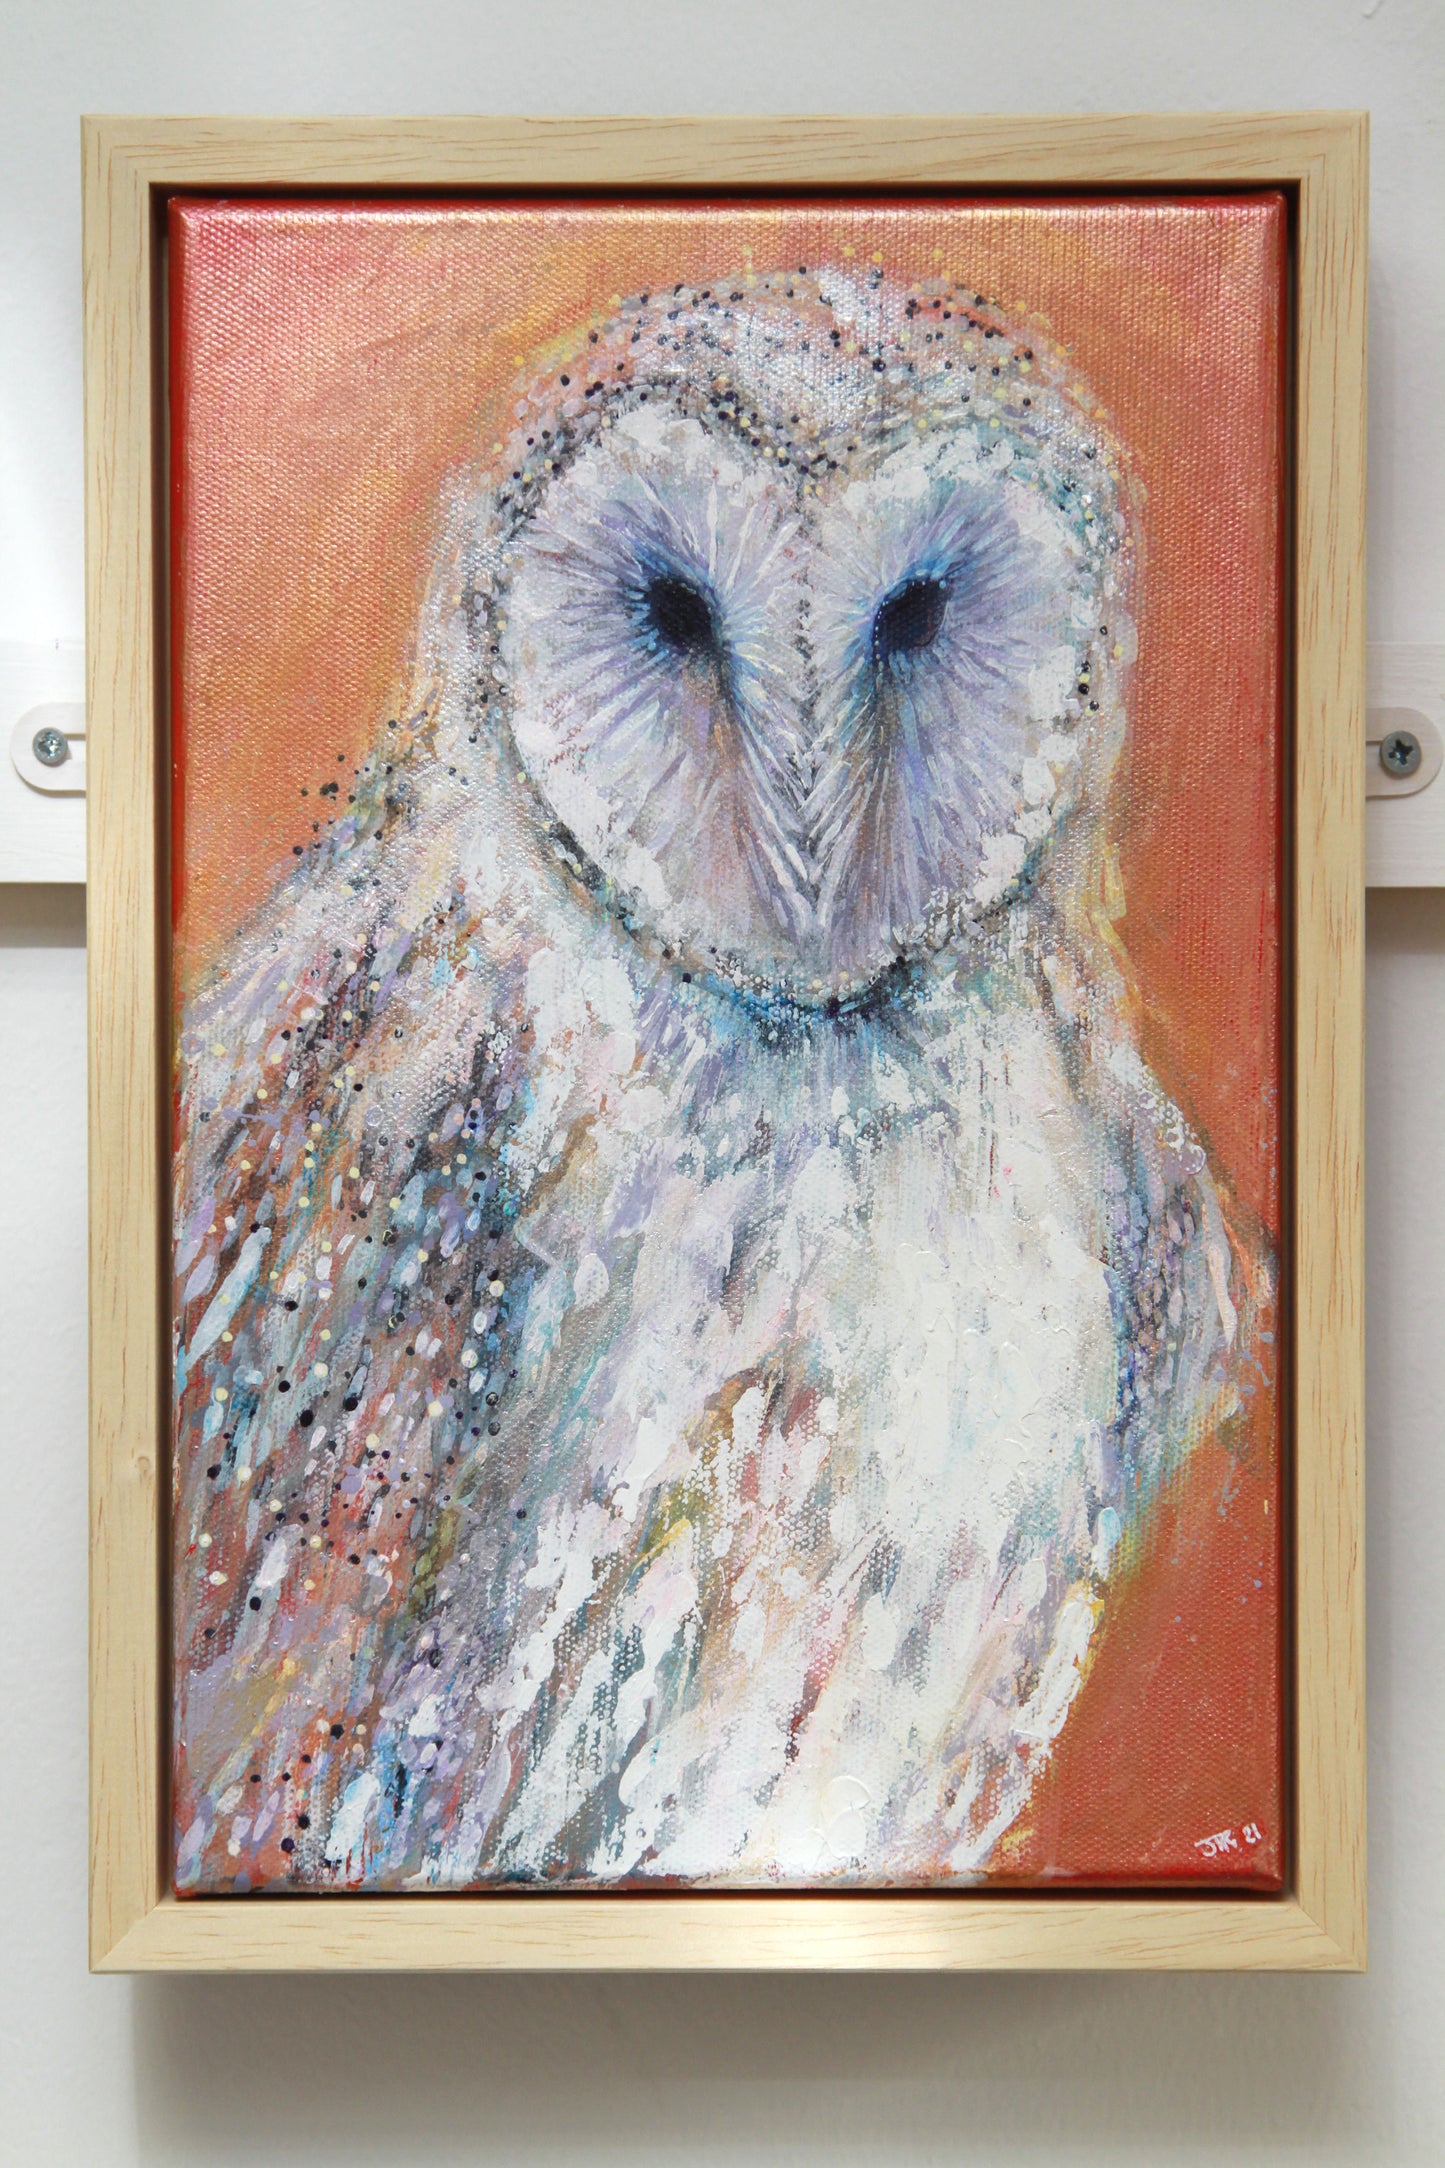 Owl - Barn